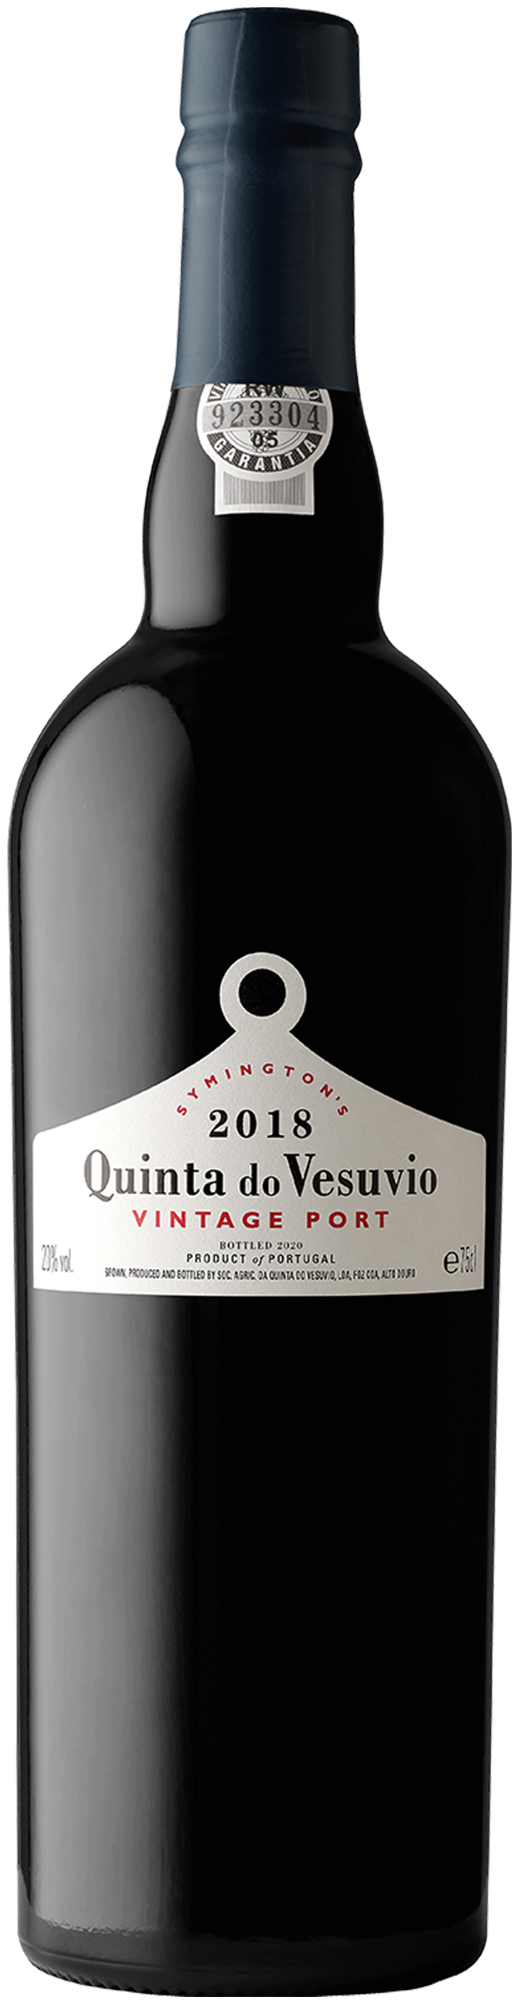 Product Image for QUINTA DO VESUVIO VINTAGE PORT 2018